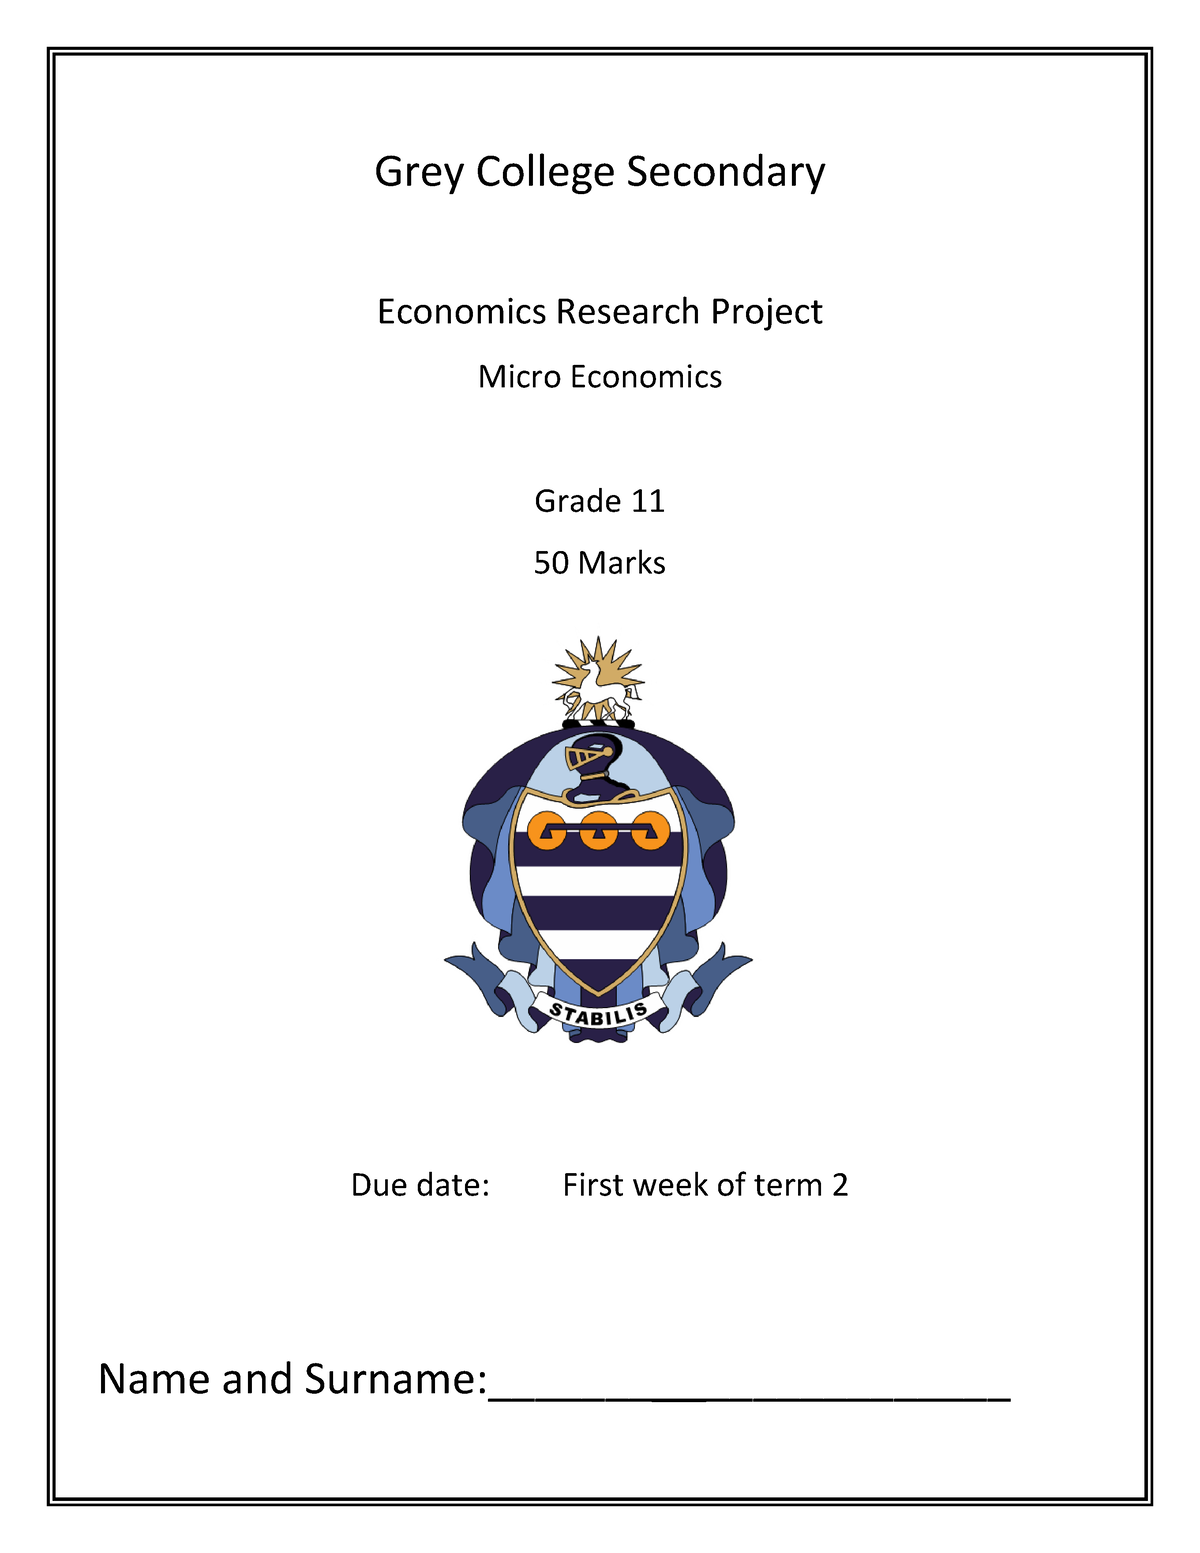 economics research project term 2